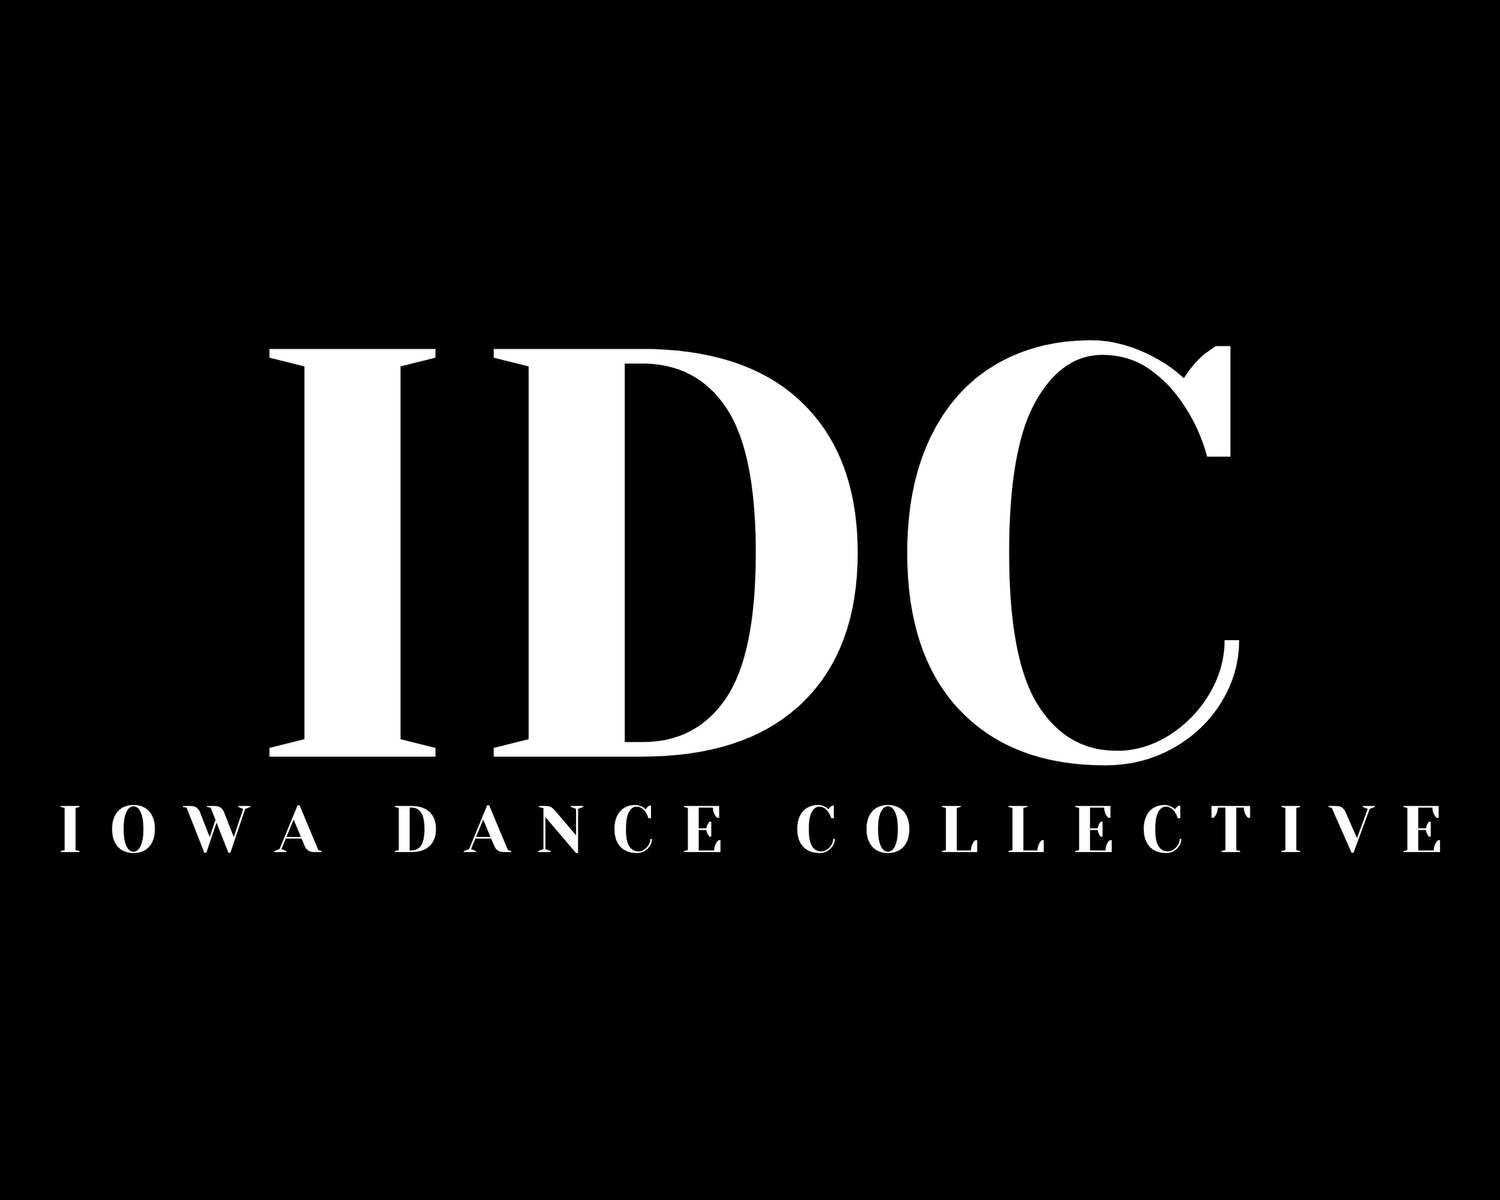 Iowa Dance Collective